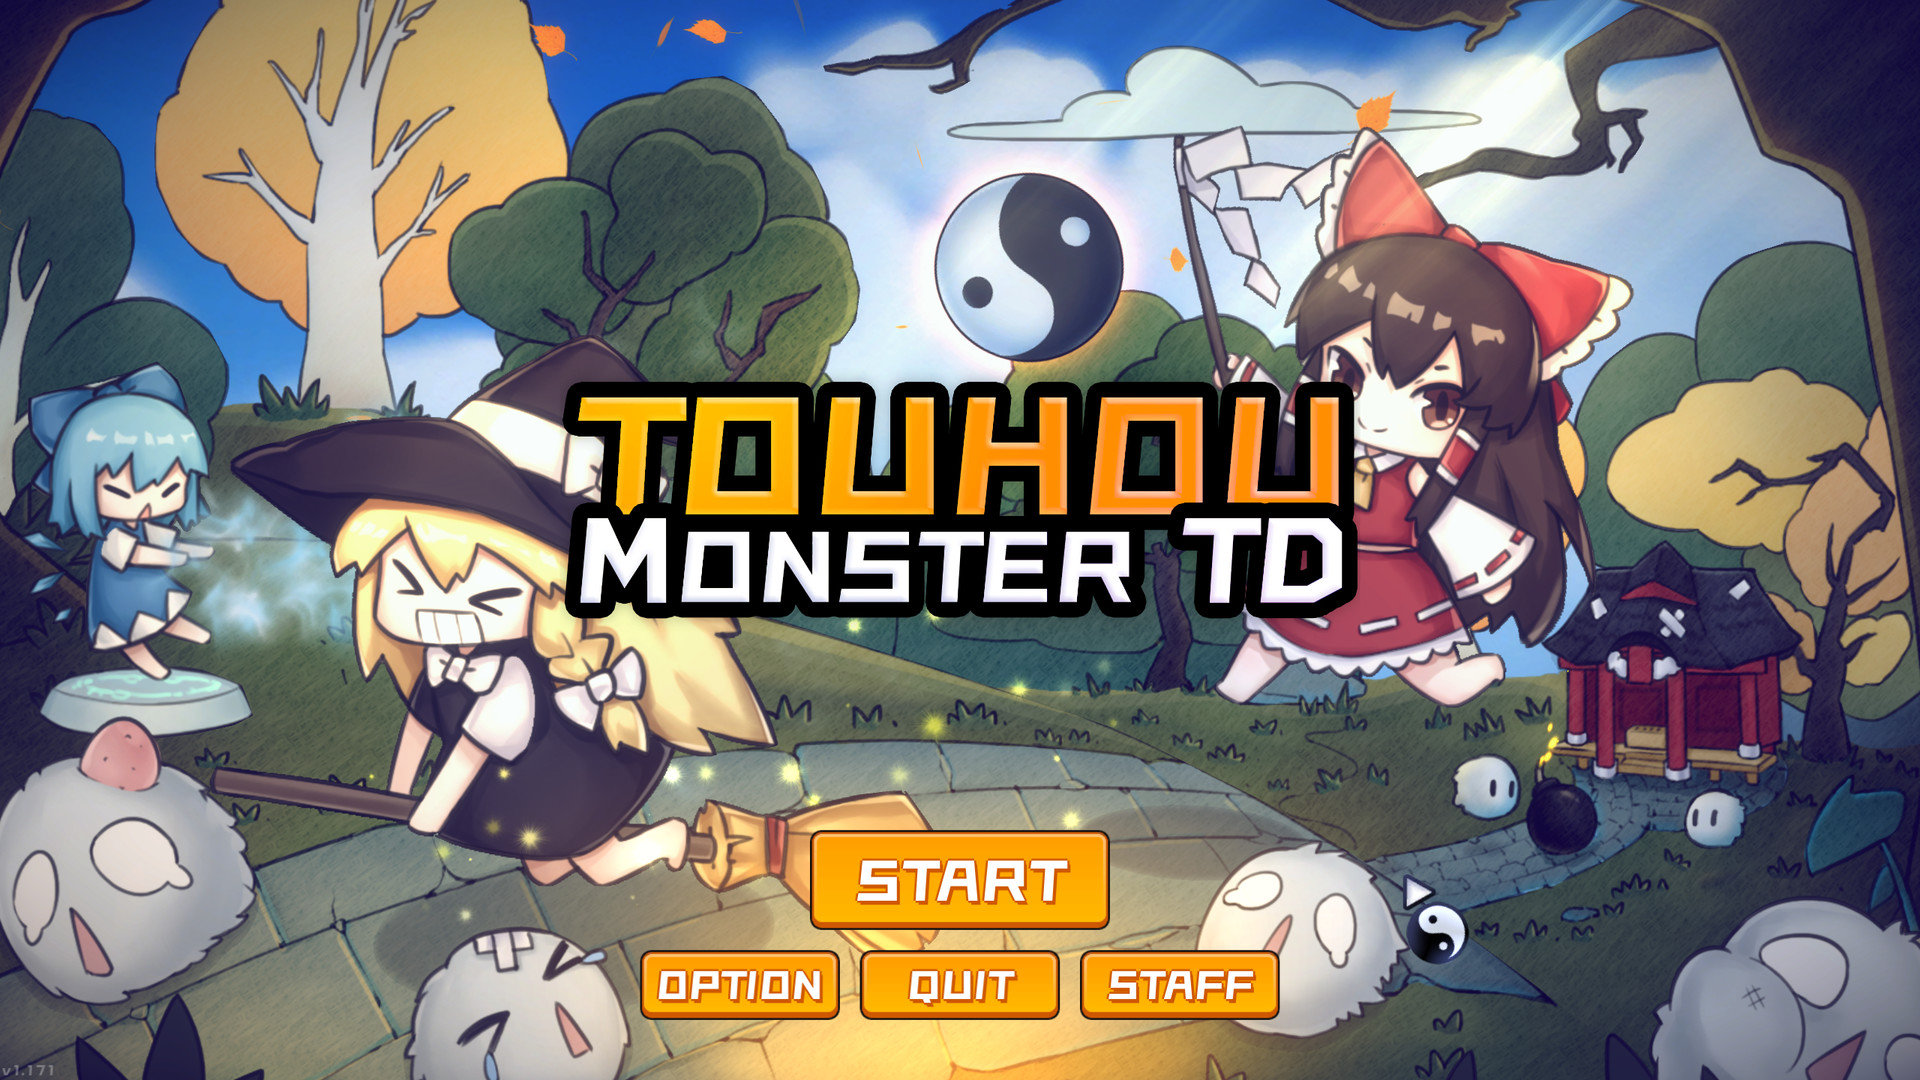 幻想乡妖怪塔防（Touhou Monster TD）DARKSiDERS中文版